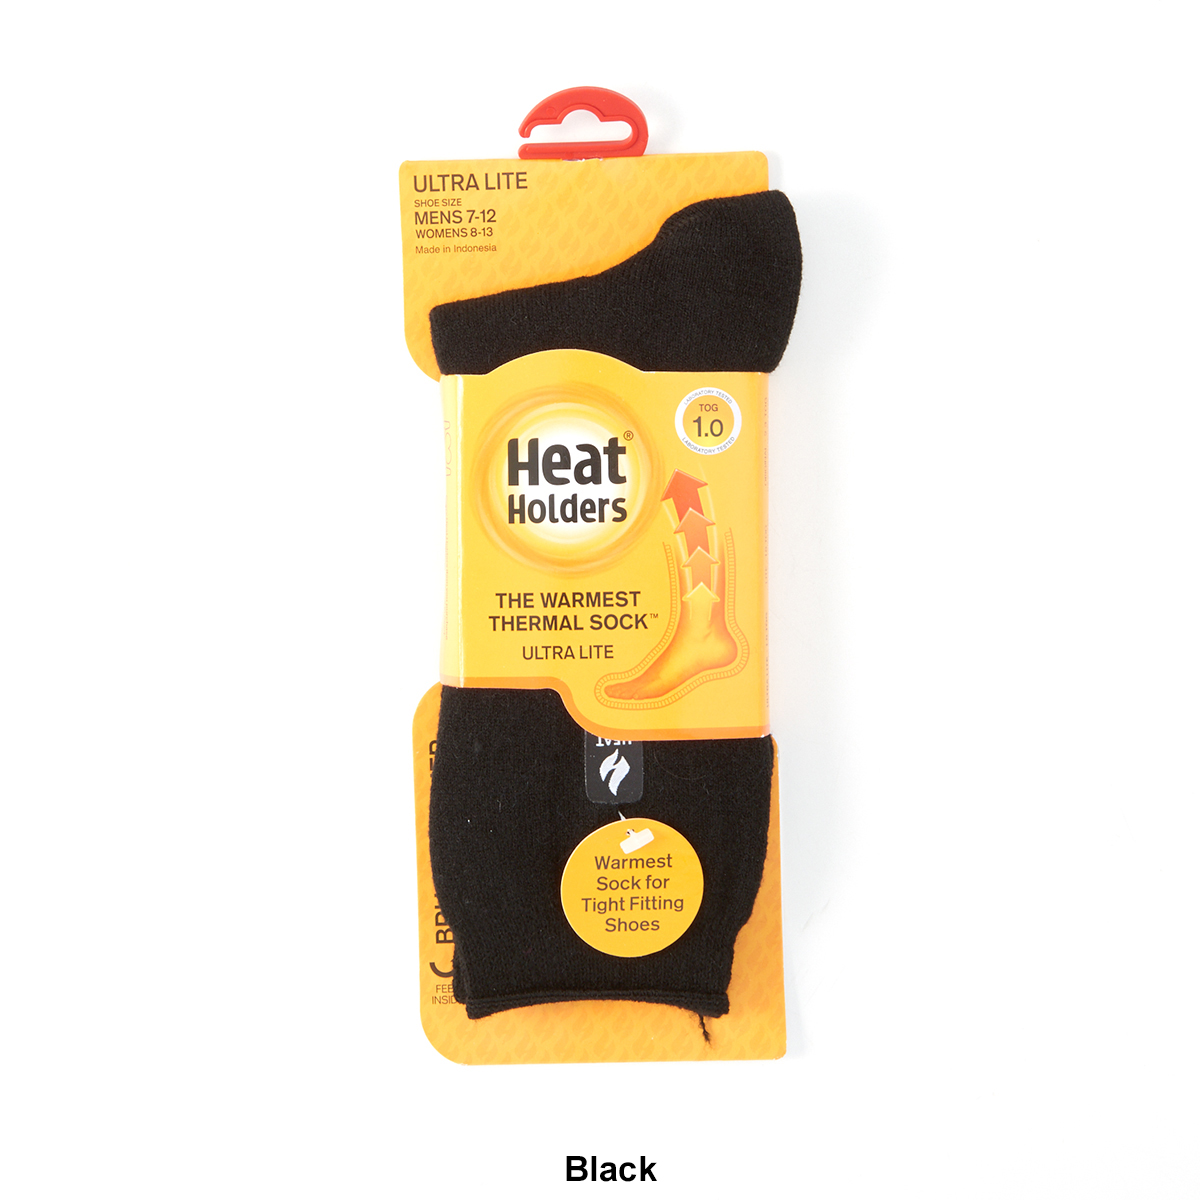 Mens Heat Holders(R) Ultra Lite Solid Crew Socks